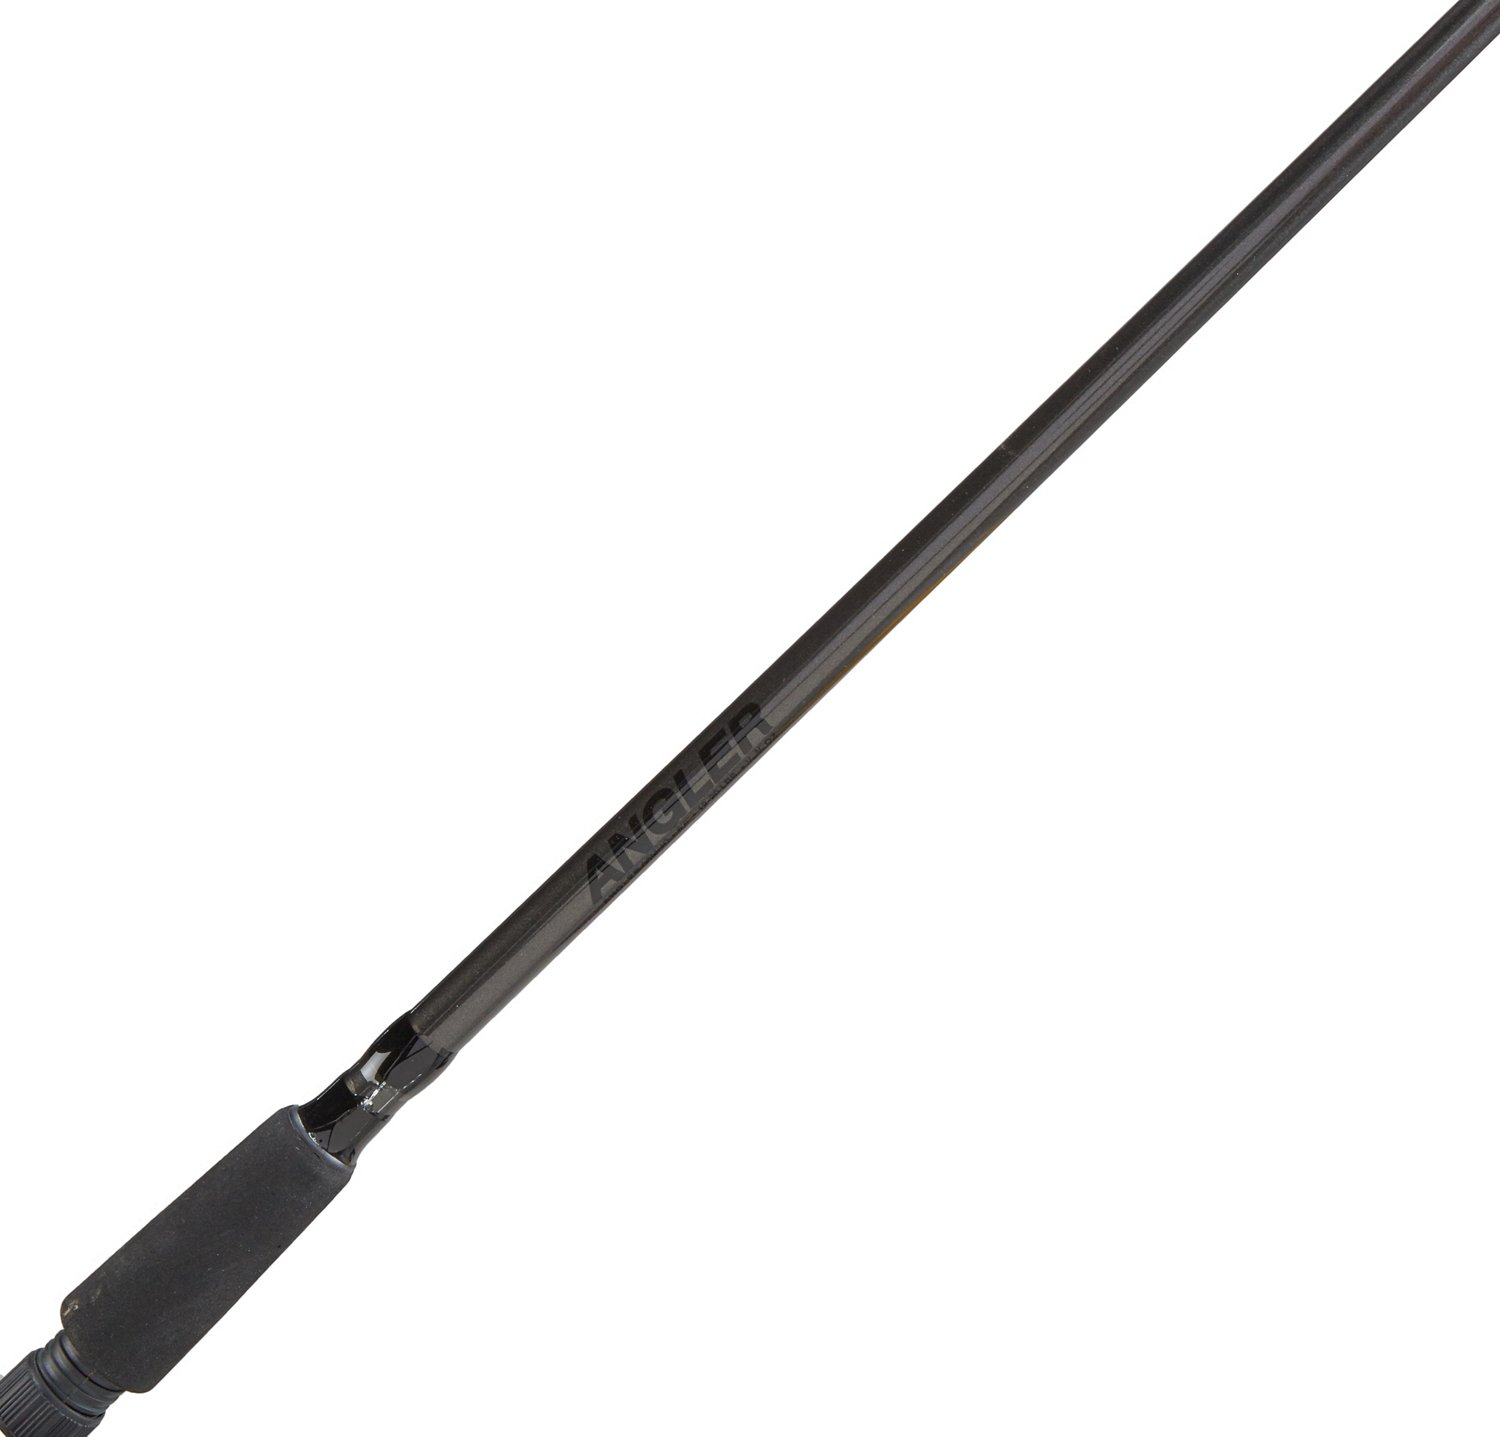 H2OX 6 foot 6 inch Angler Baitcast Combo